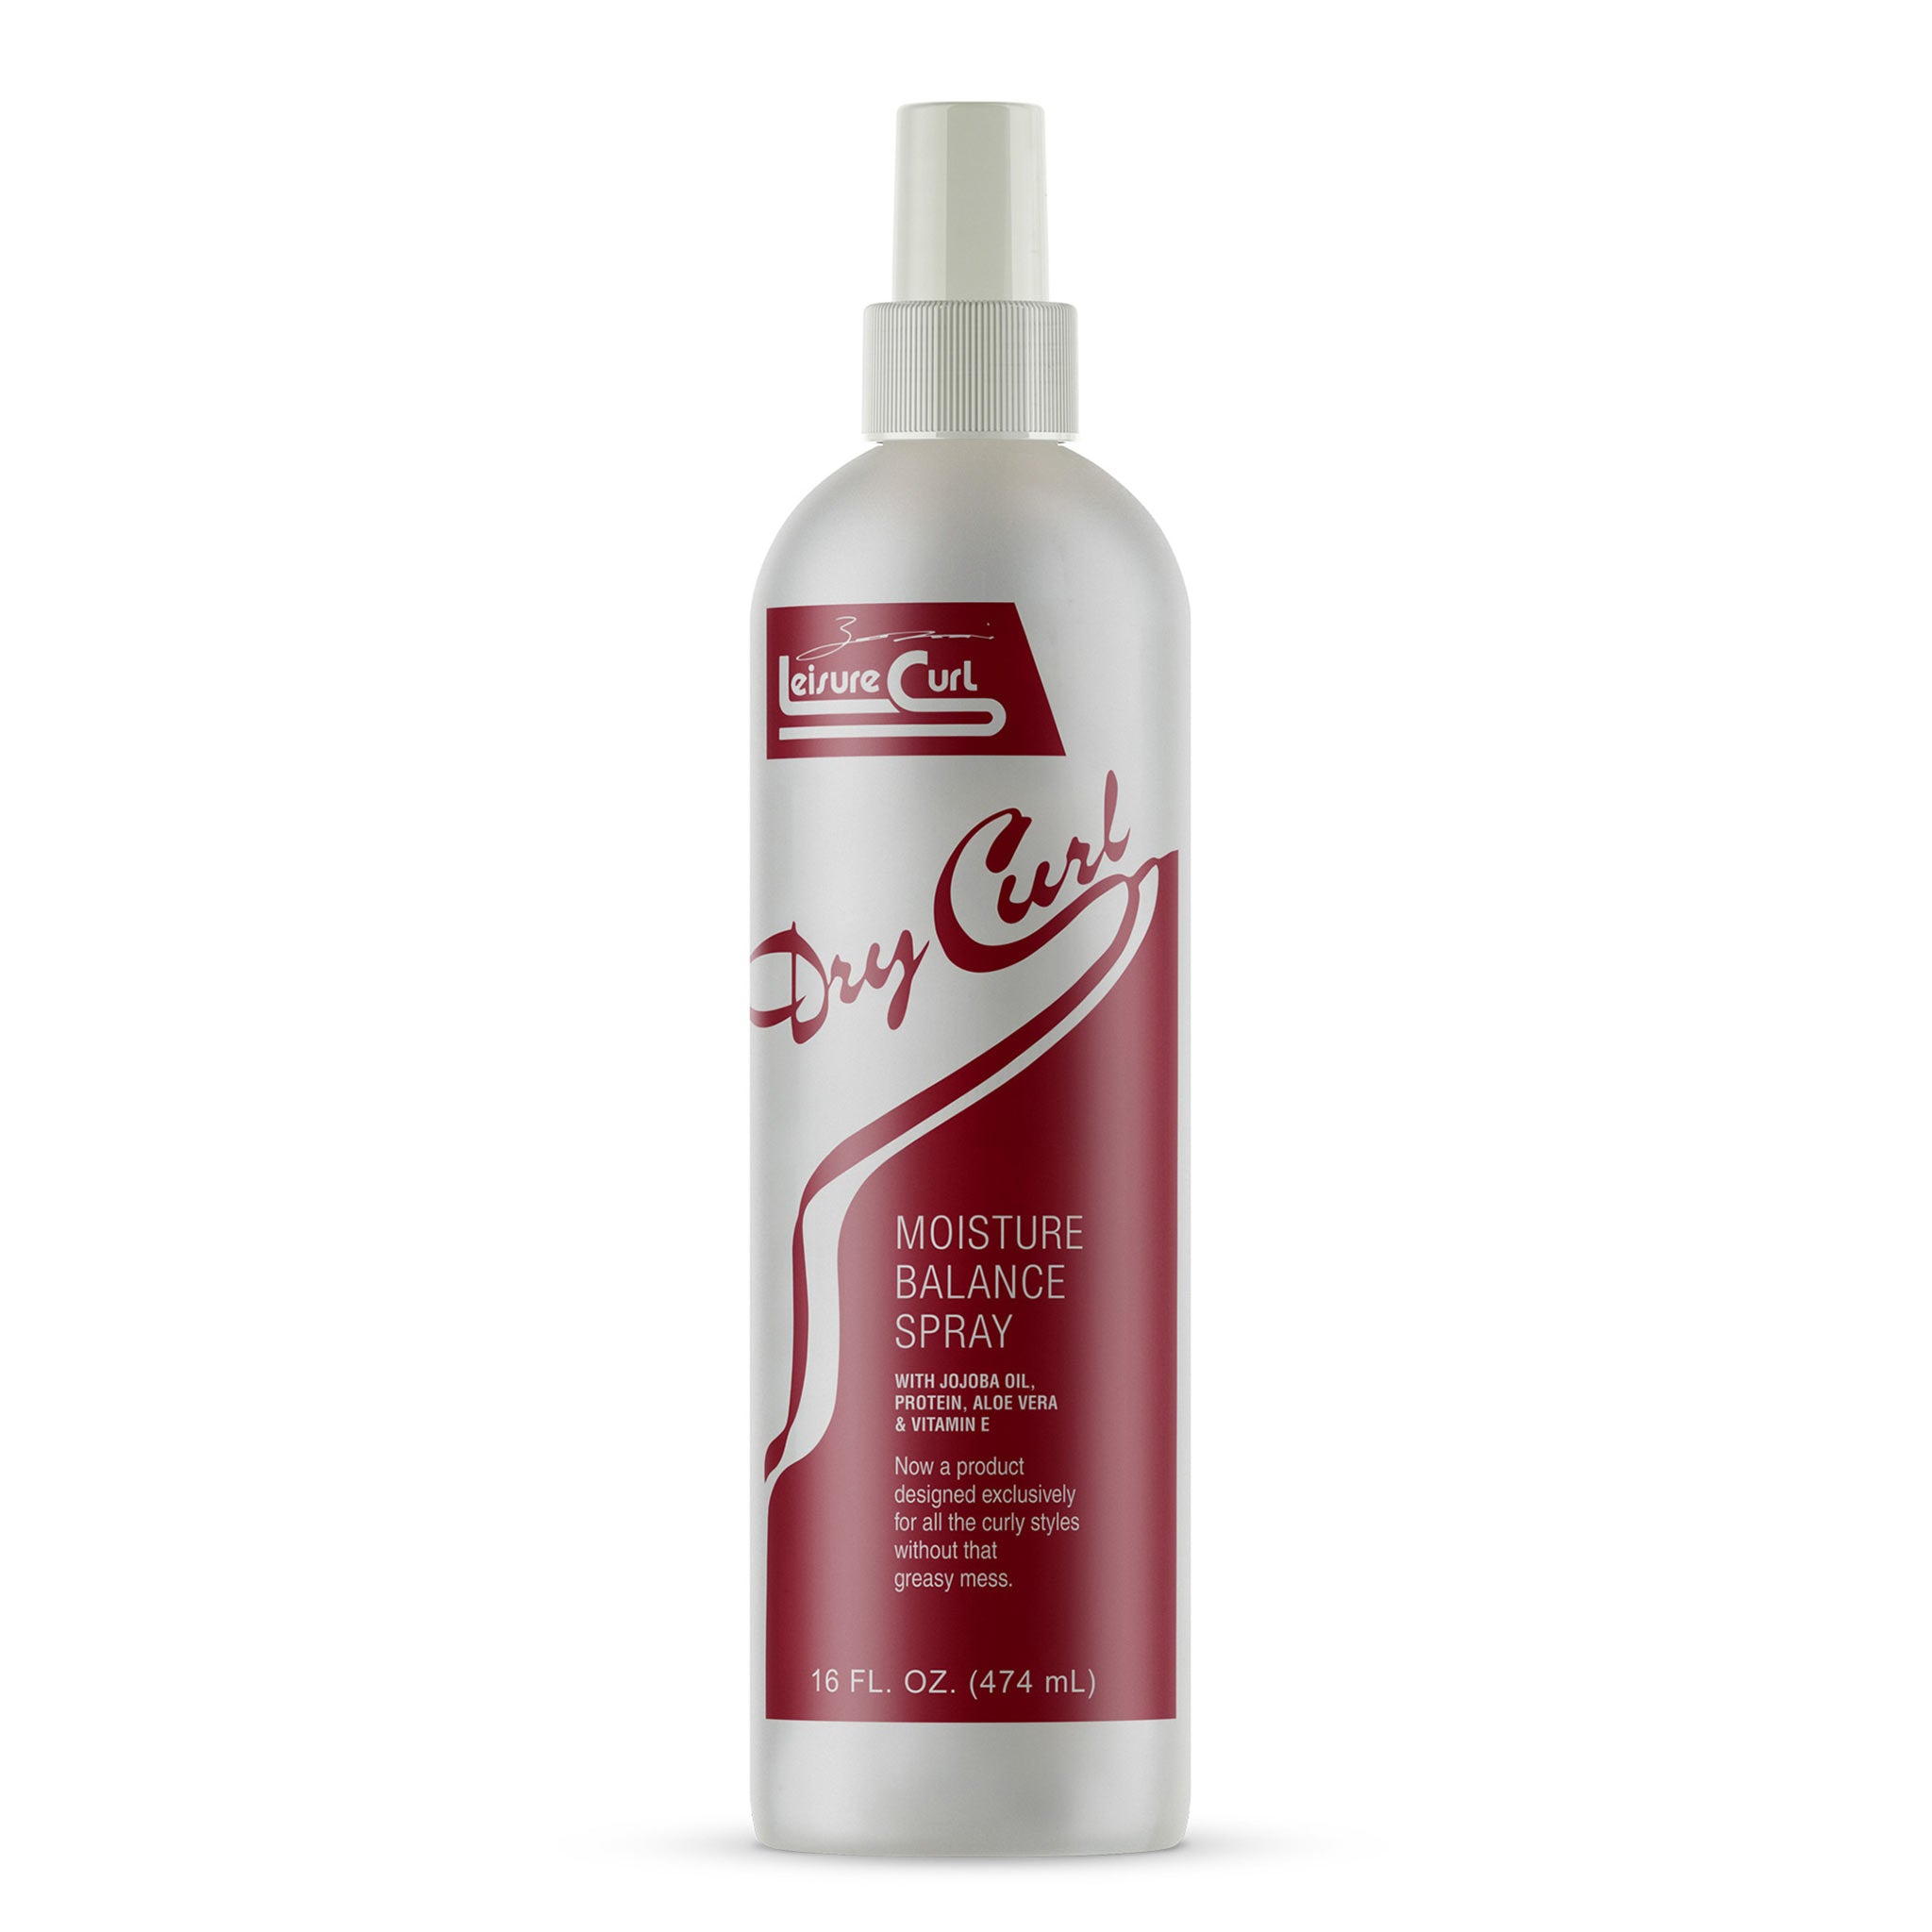 Leisure Curl Dry Curl Moisture Balance Spray - Afam Concept Inc.